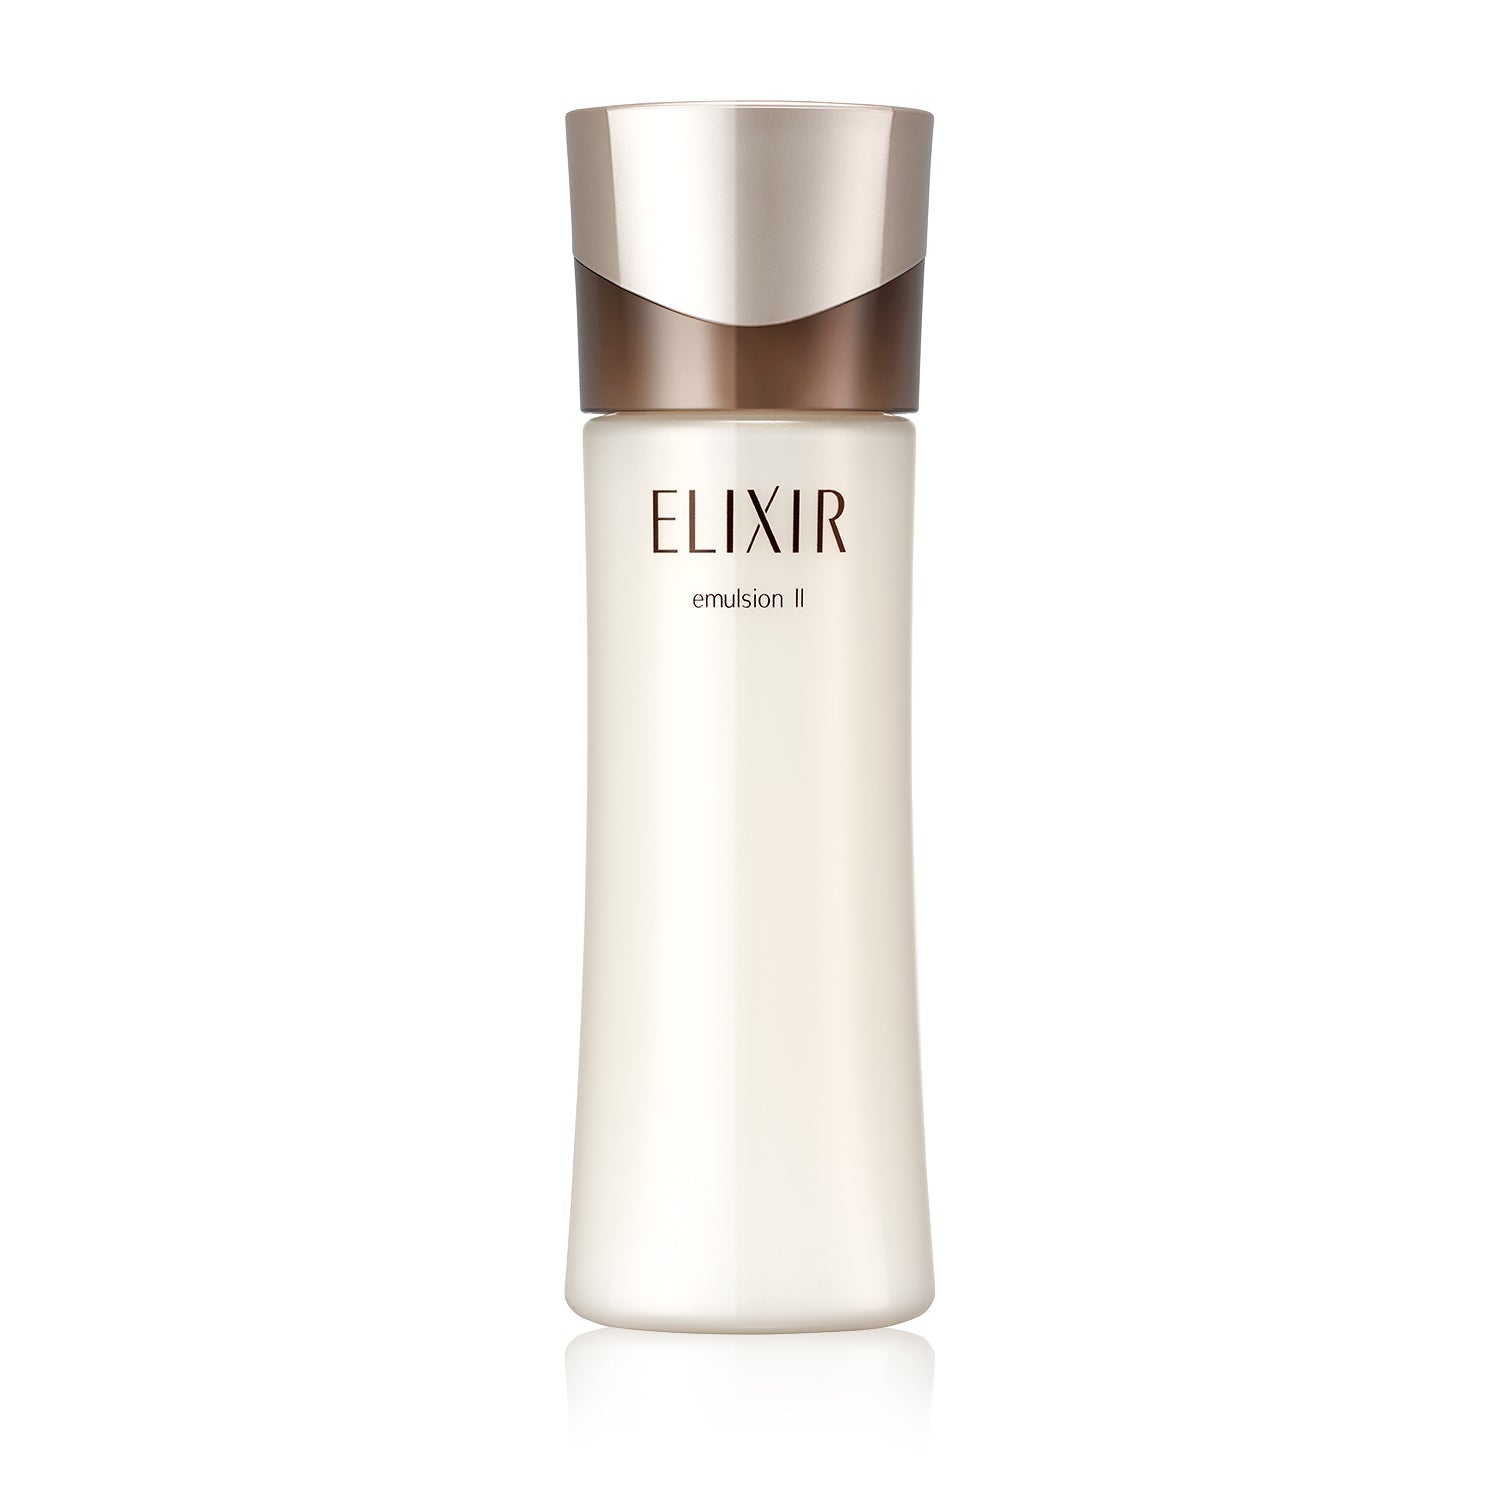 Shiseido Elixir Advanced Skin Care by Age Emulsion (Anti Aging Skin Glowing Face Milk) 130ml